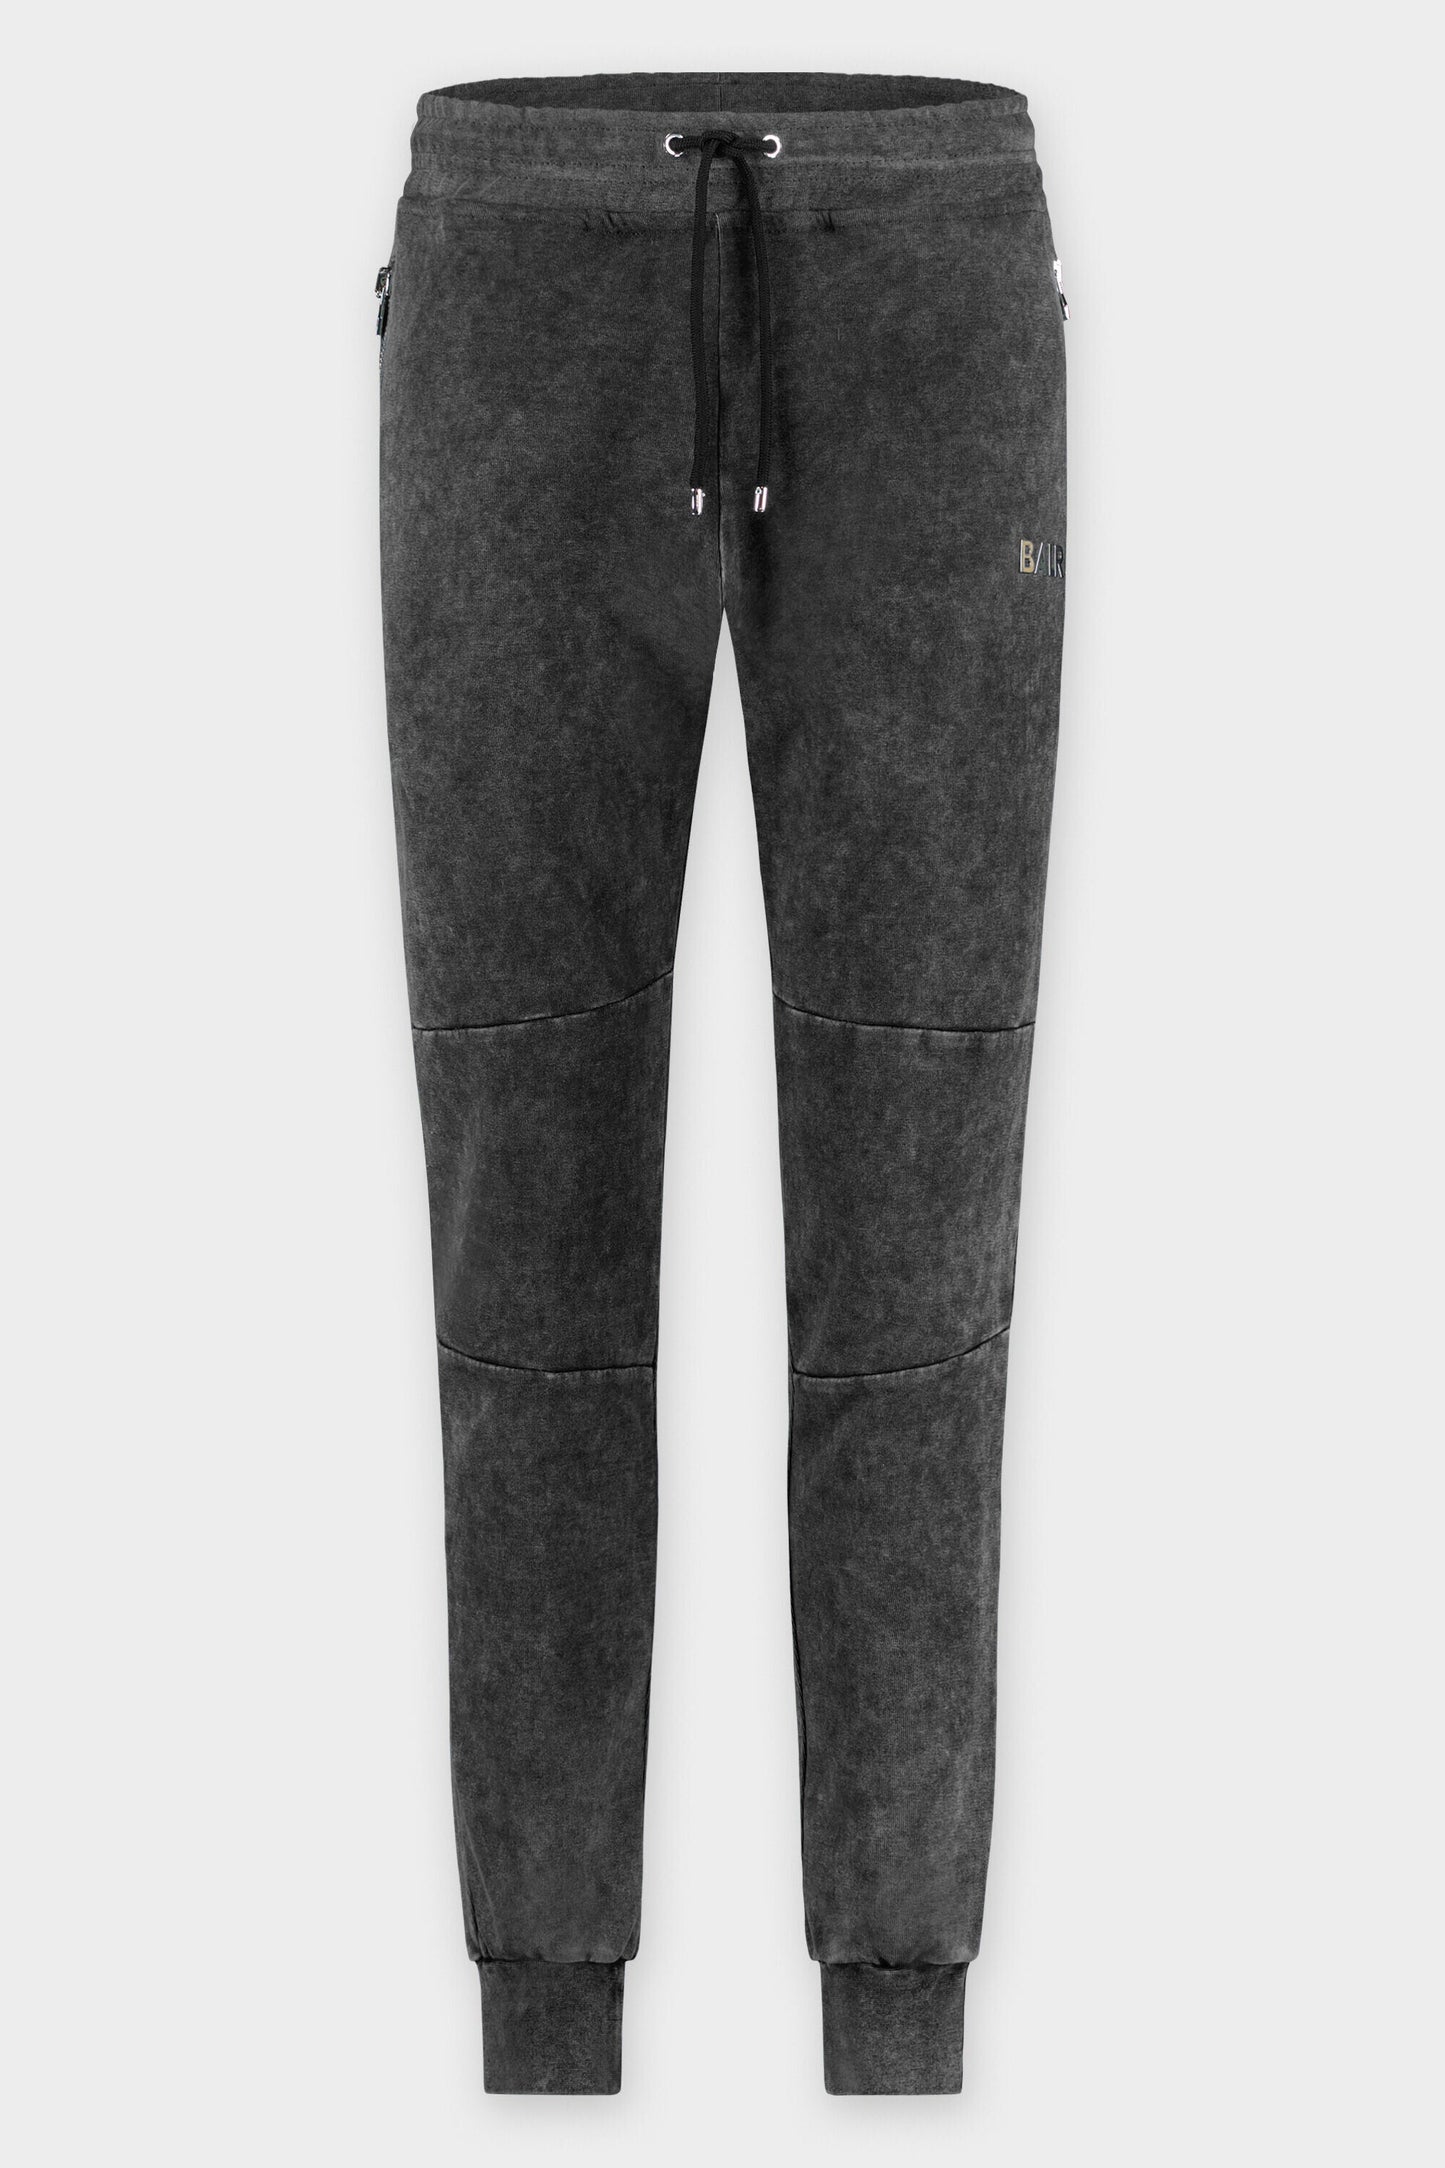 Q-Series Slim Classic Sweatpants Vintage Washed